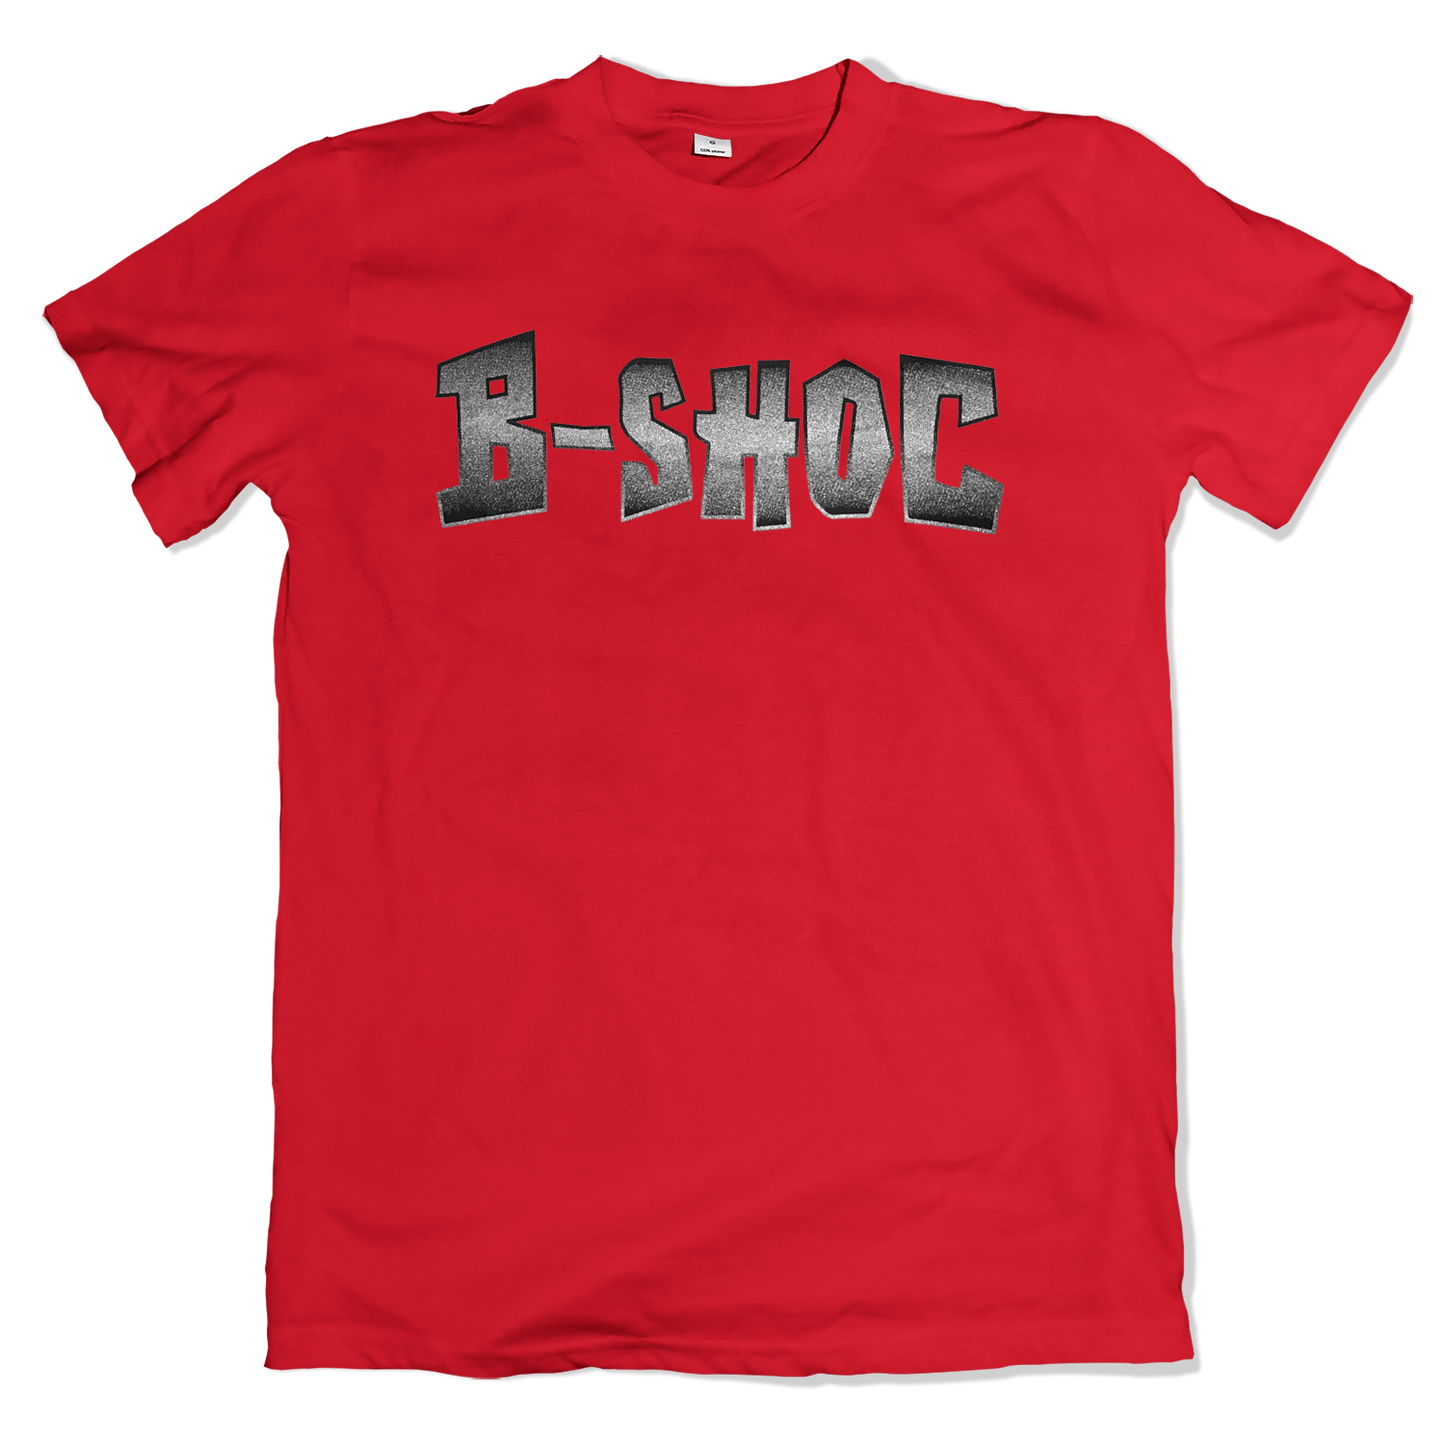 B-SHOC - Red T-Shirt